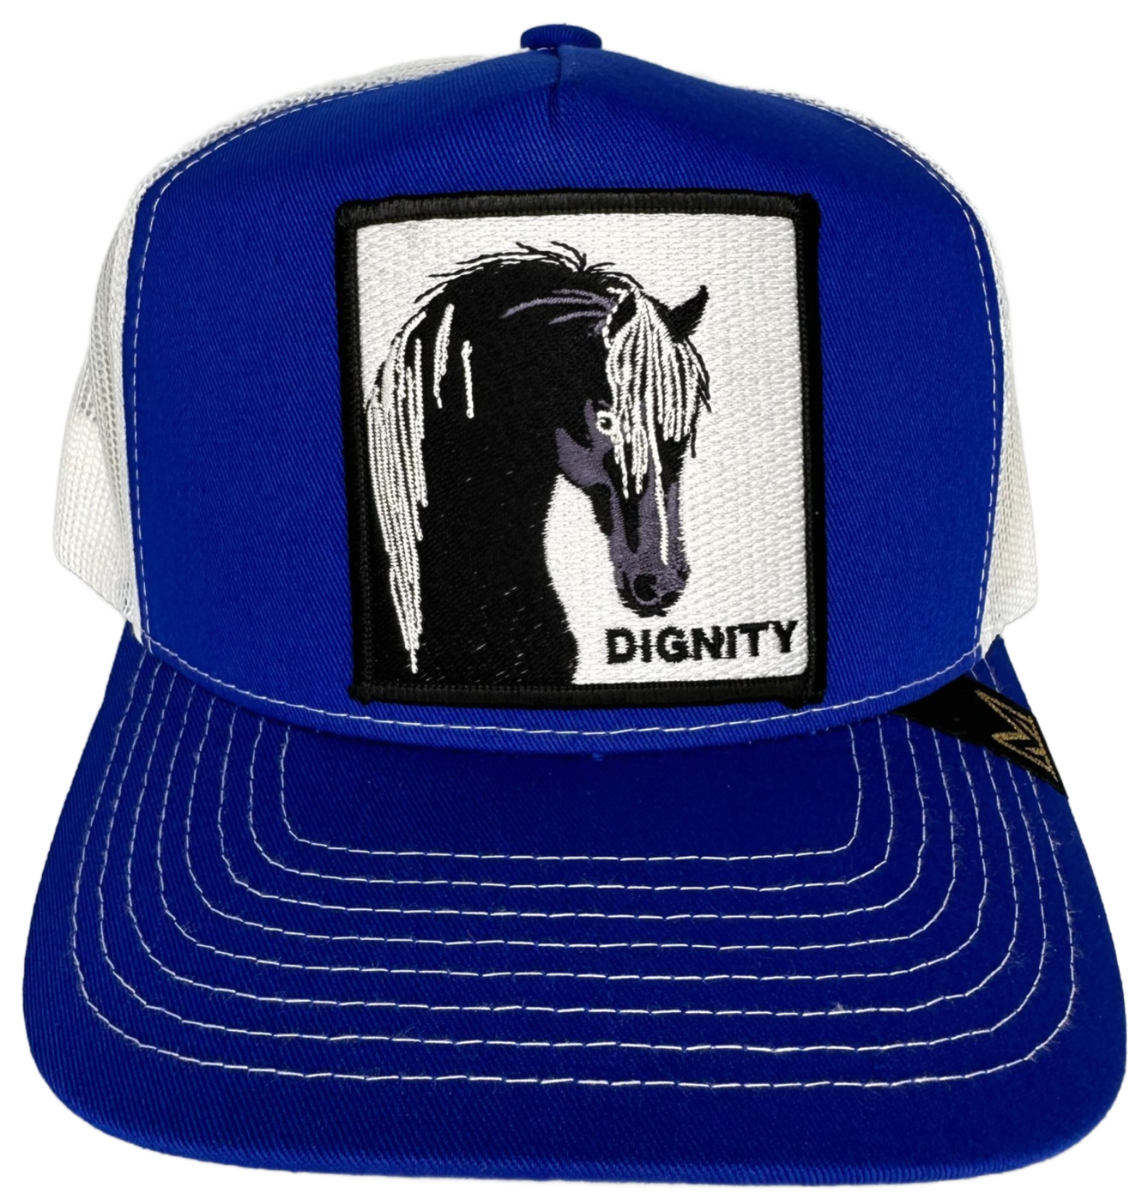 MV Dad Hats - Dignity Trucker Hat - Royal Blue/White